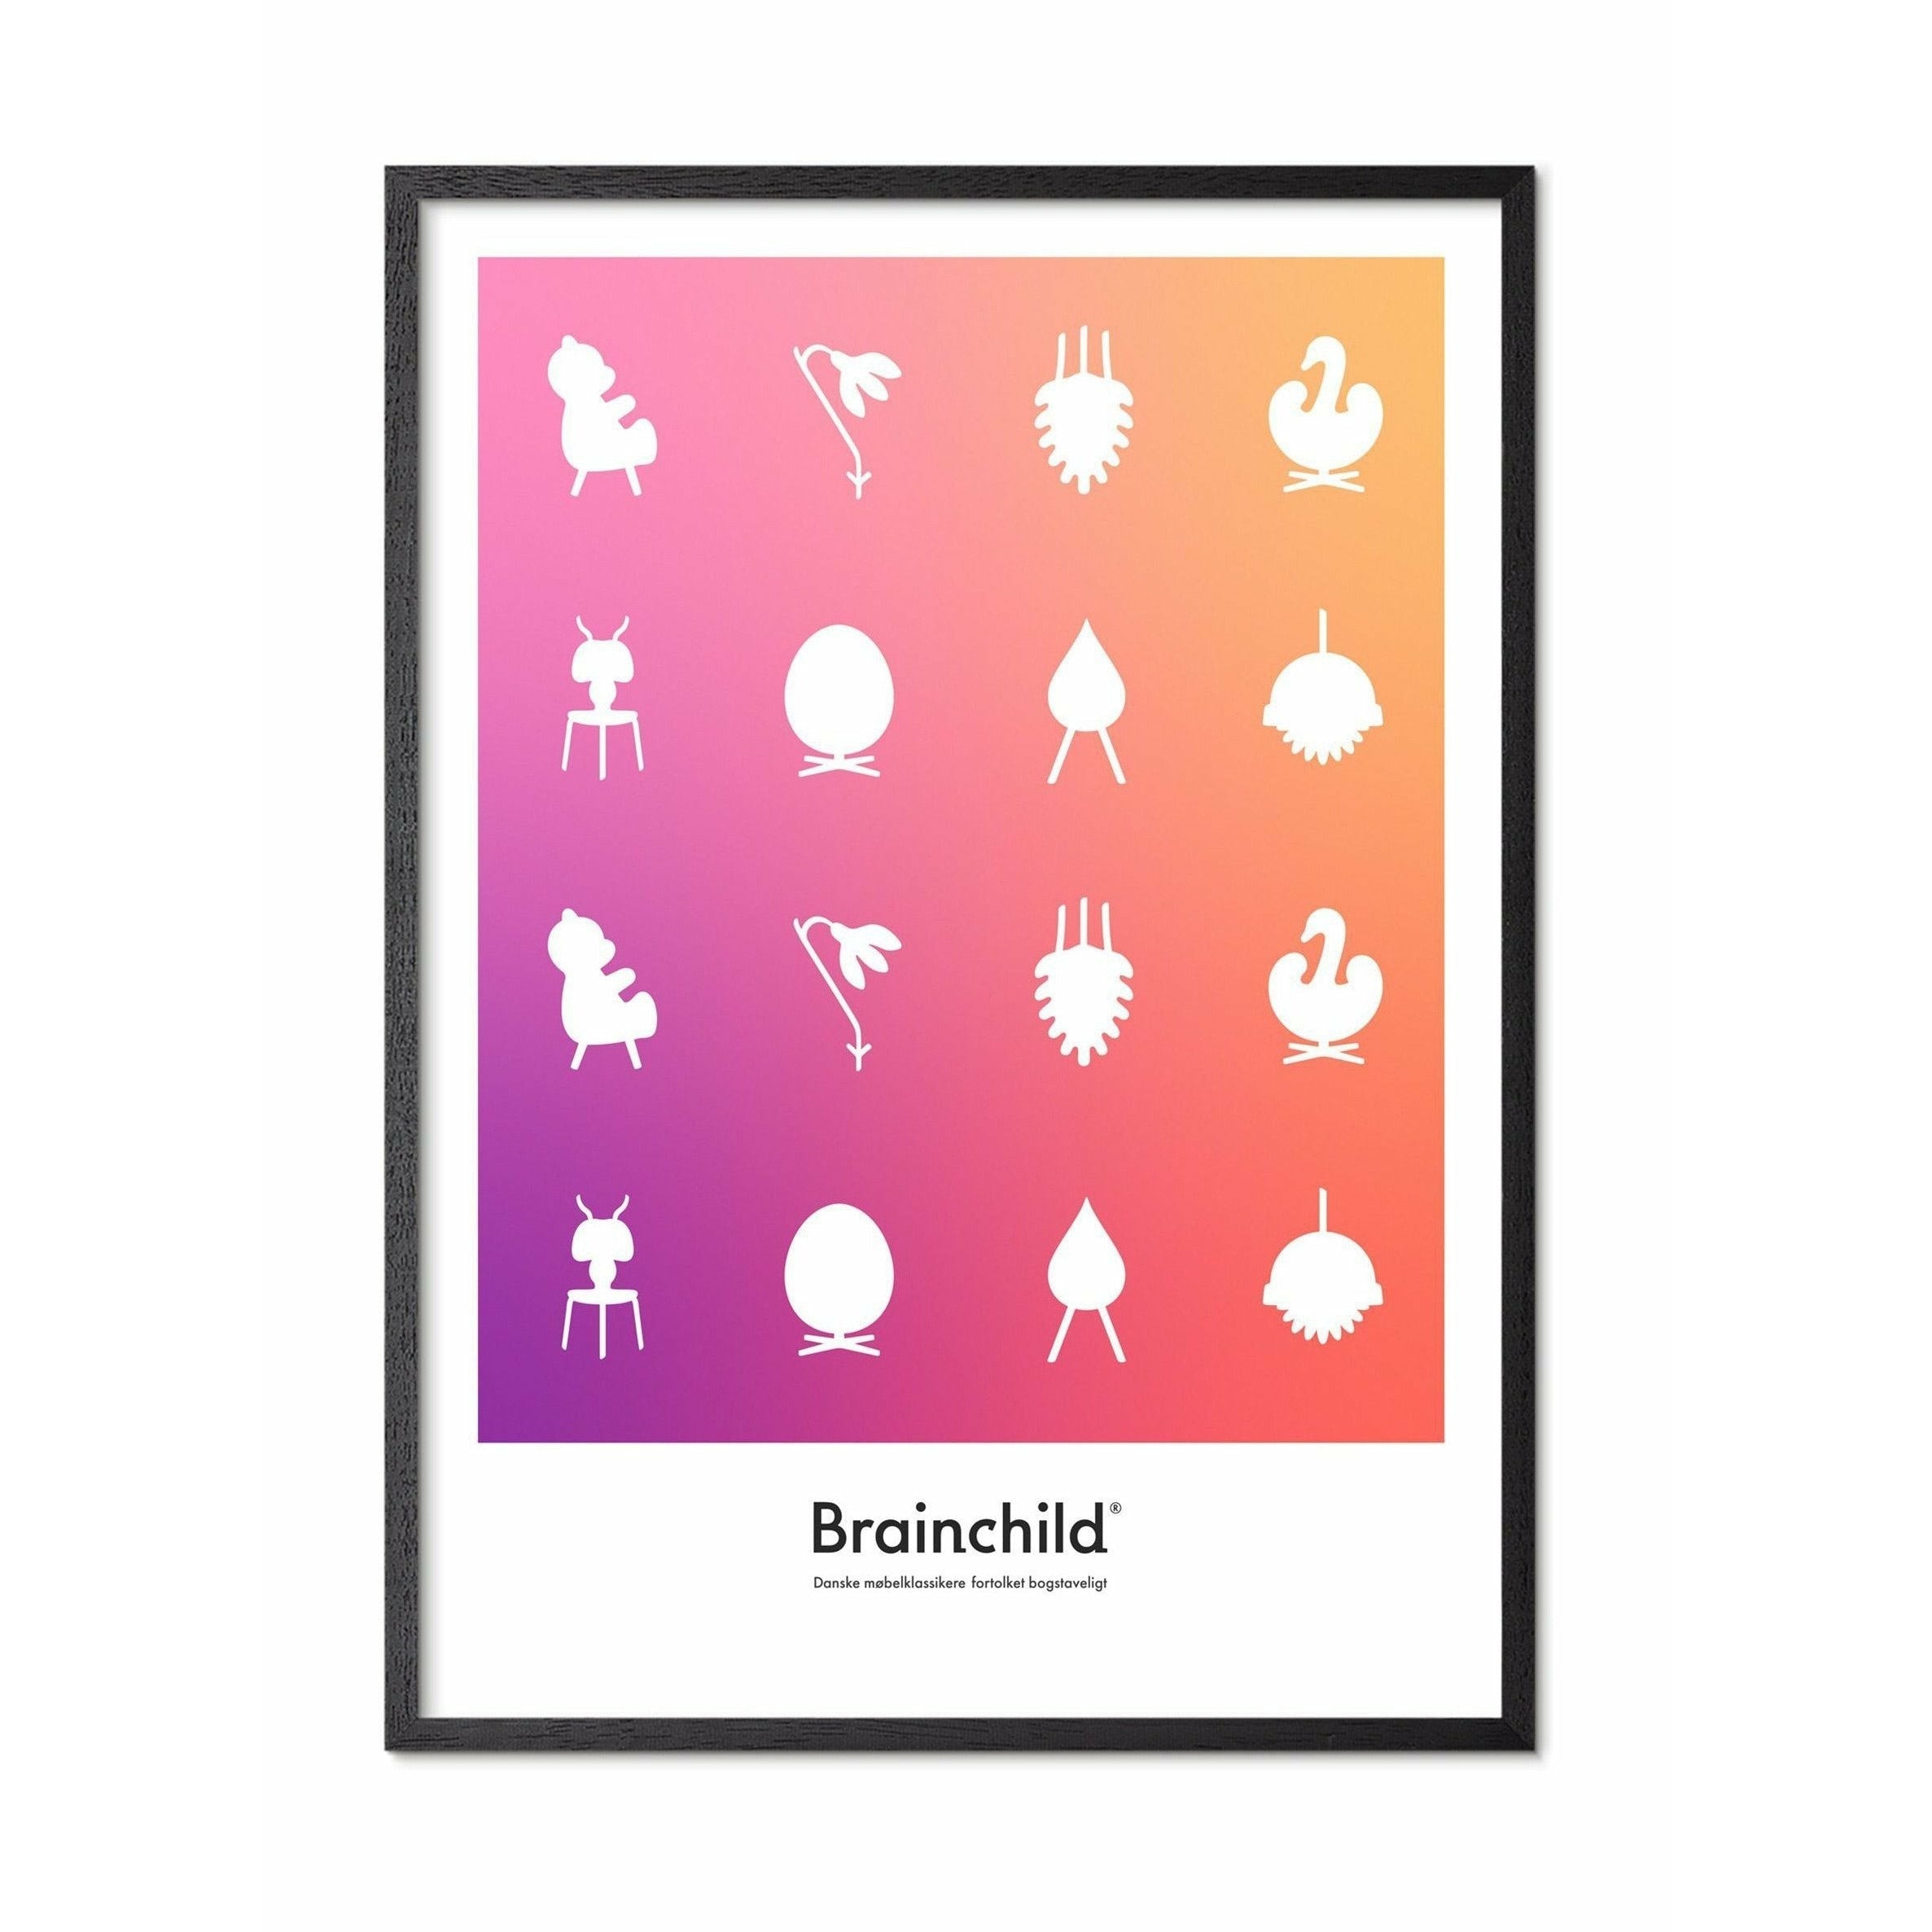 Brainchild Design Icon Poster, Rahmen aus schwarz lackiertem Holz 50x70 cm, Farbe